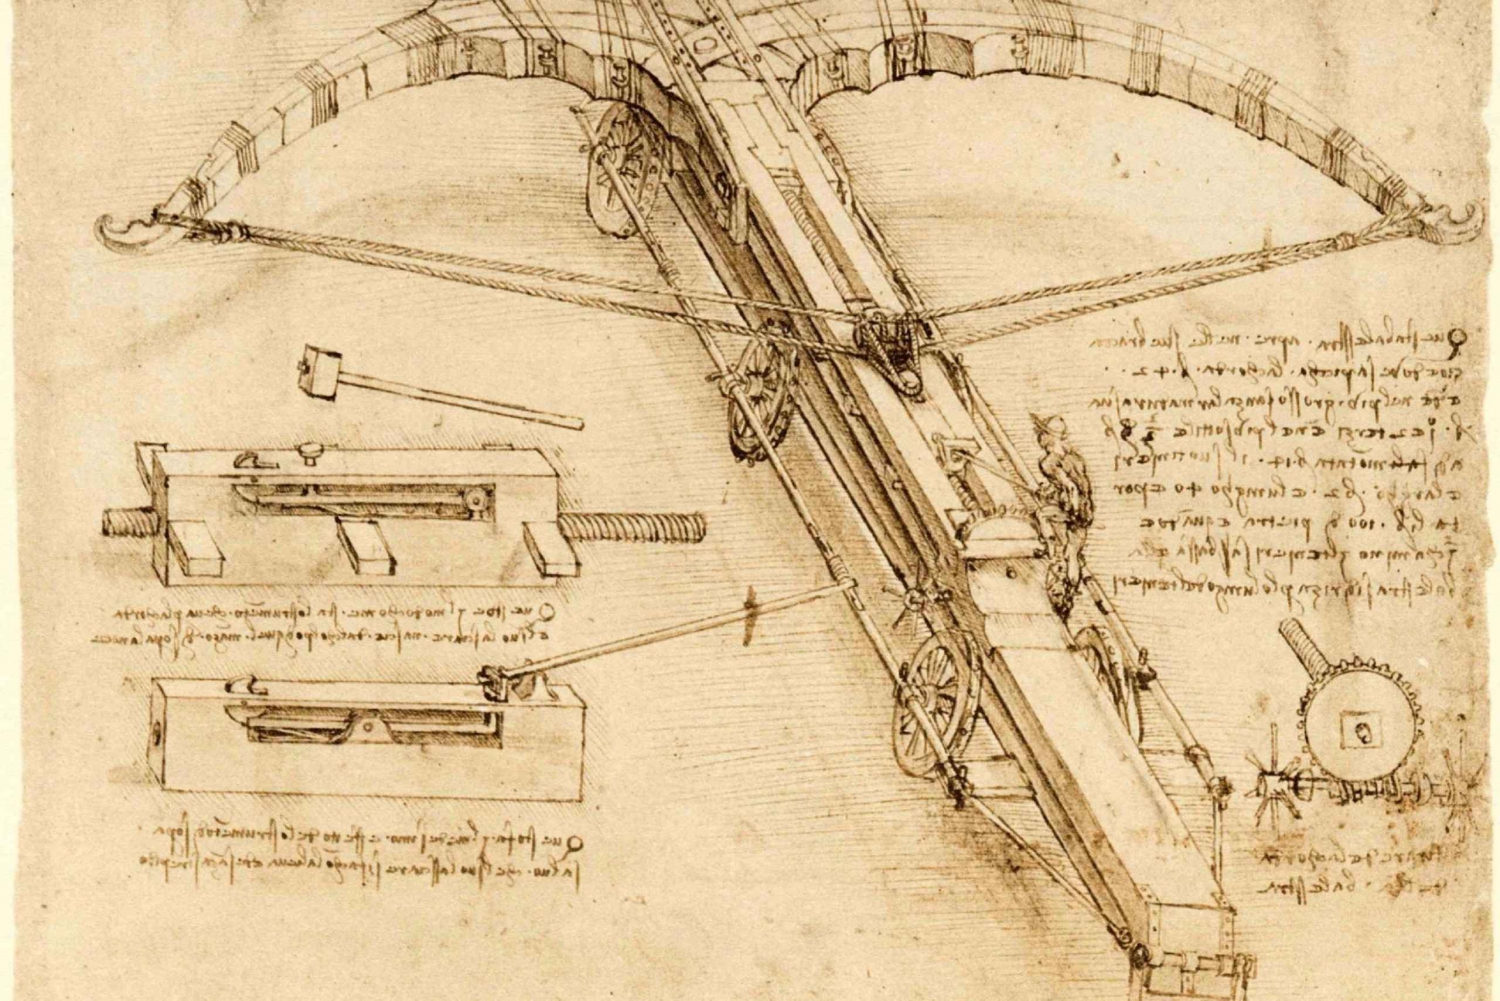 Milan: Ambrosiana Gallery & Da Vinci's Codex Atlanticus Tour